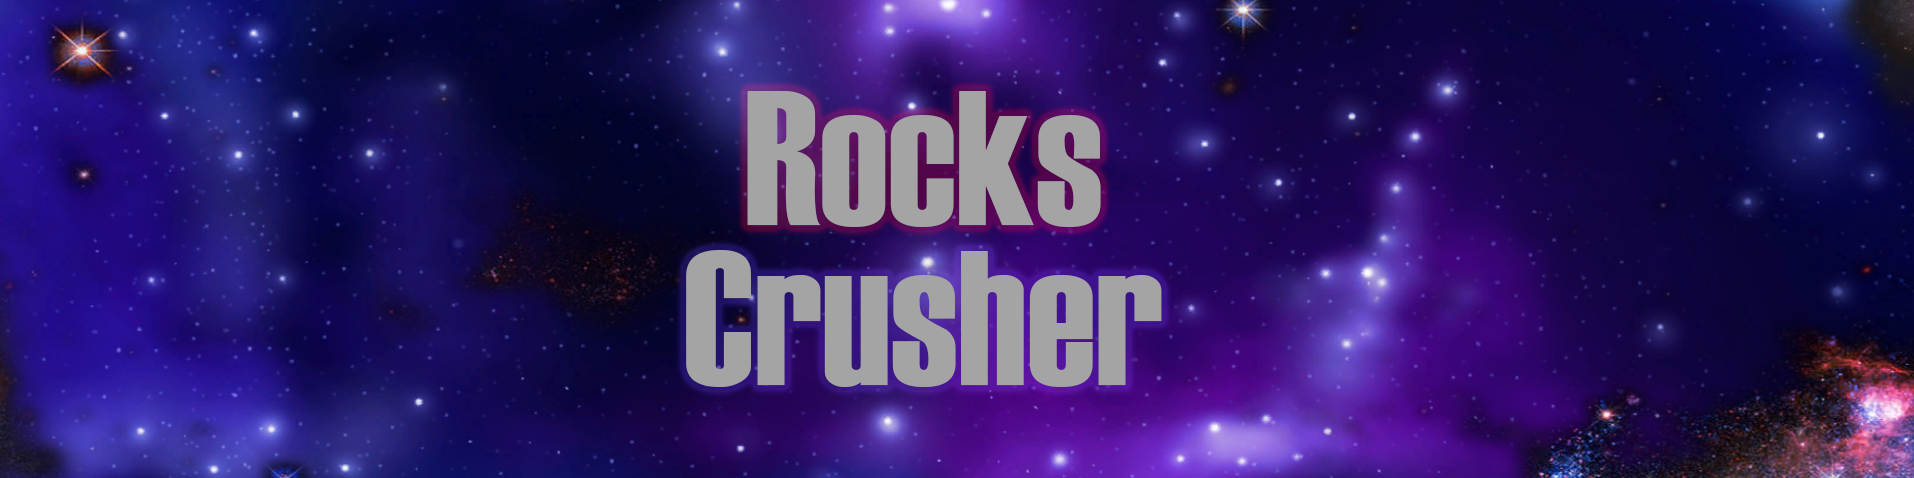 Rocks Crusher